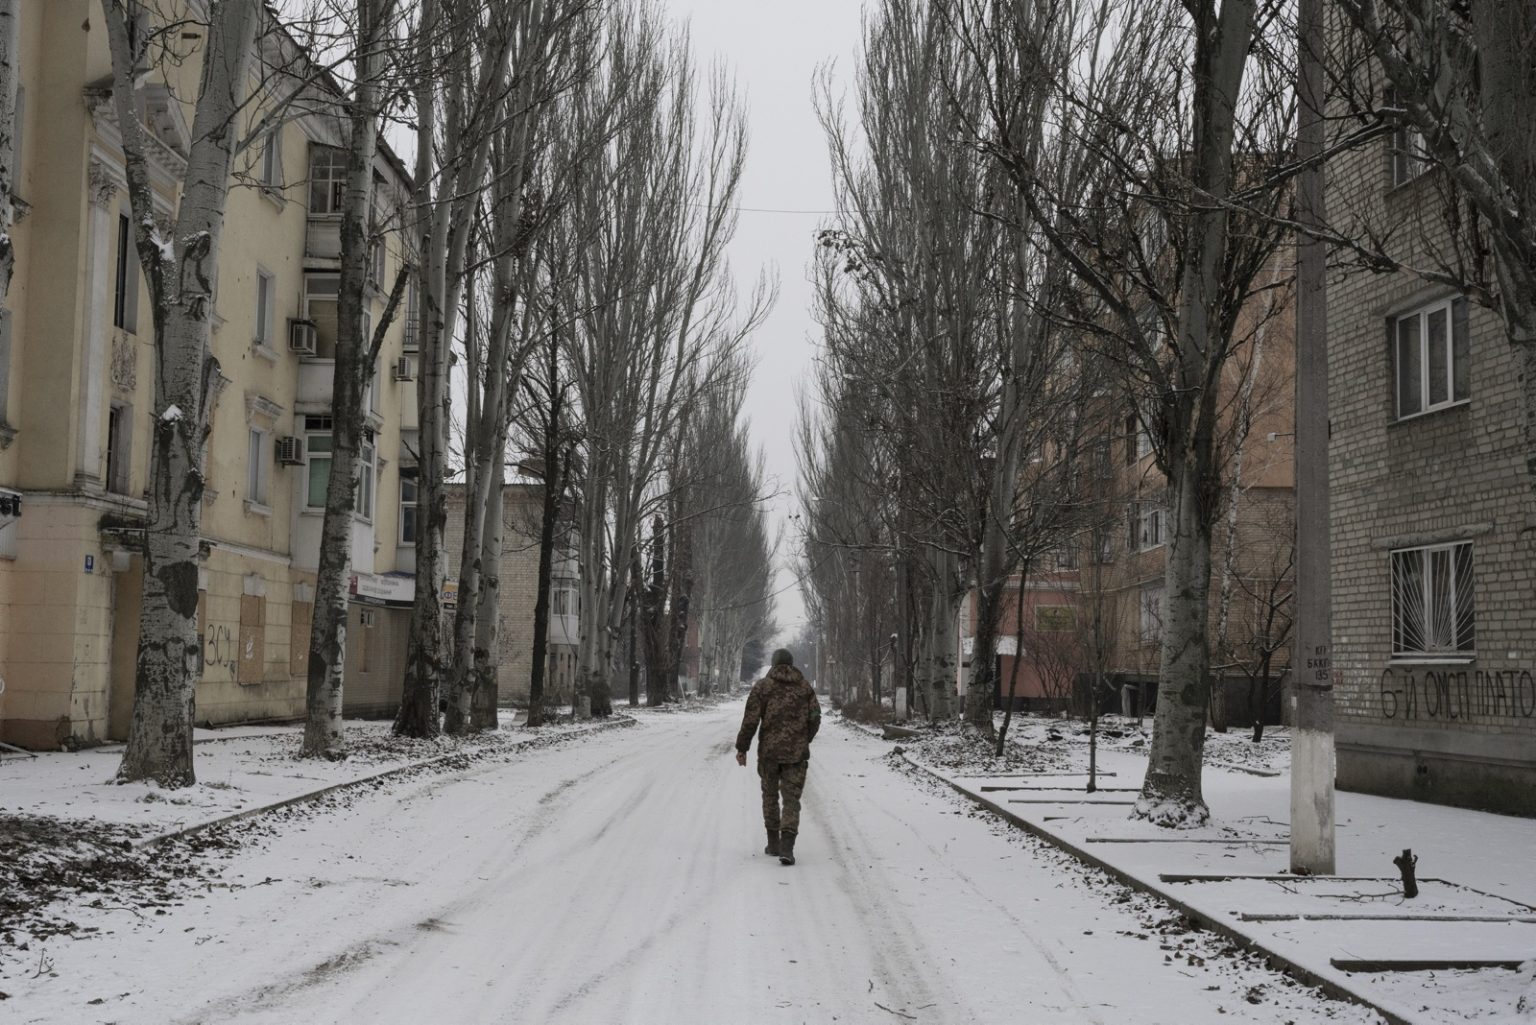 UKRAINE, Bakhmut. January 29, 2023 - An Ukrainian servicemen walks along an empty street in Bakhmut. ><
UCRAINA, Bakhmut. 29 gennaio 2023 - Un militare ucraino cammina lungo una strada vuota di Bakhmut.